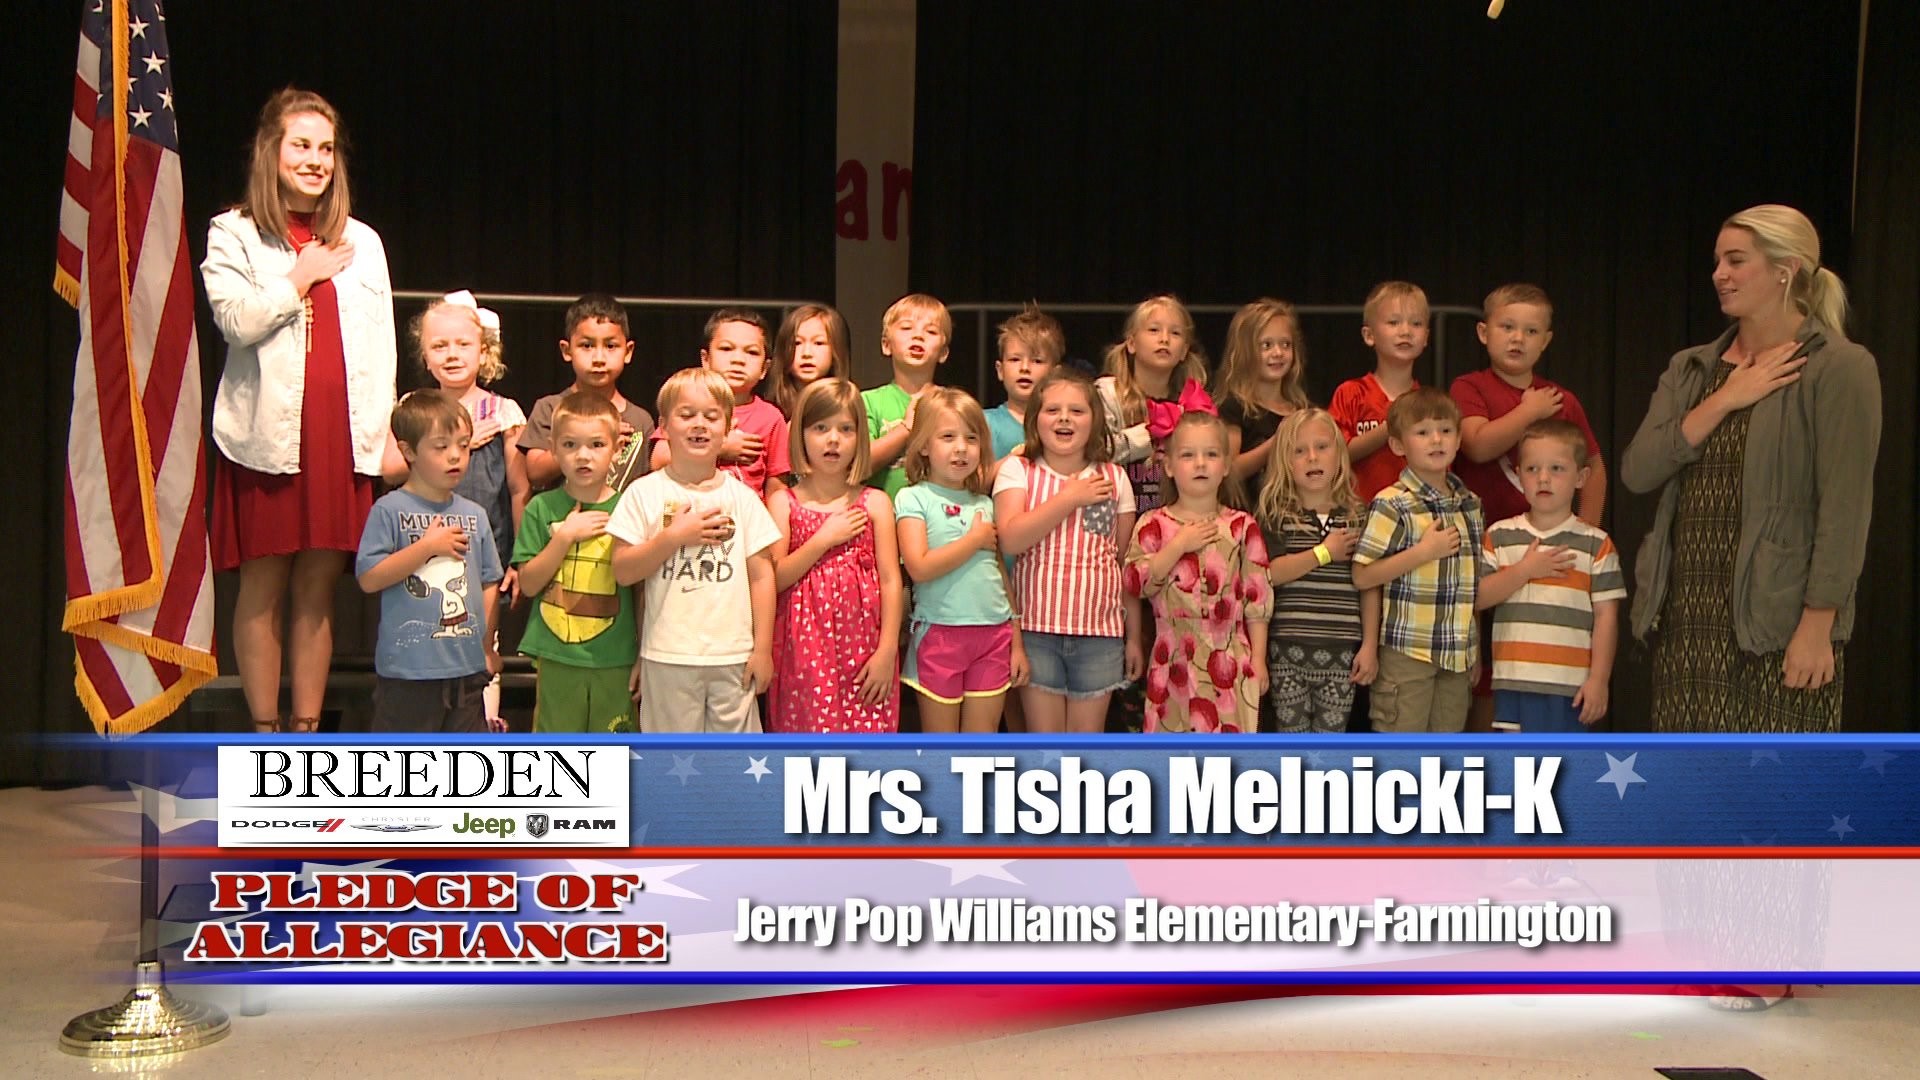 Jerry Pop Williams Elementary, Farmington - Mrs. Tisha Melnicki - Kindergarten